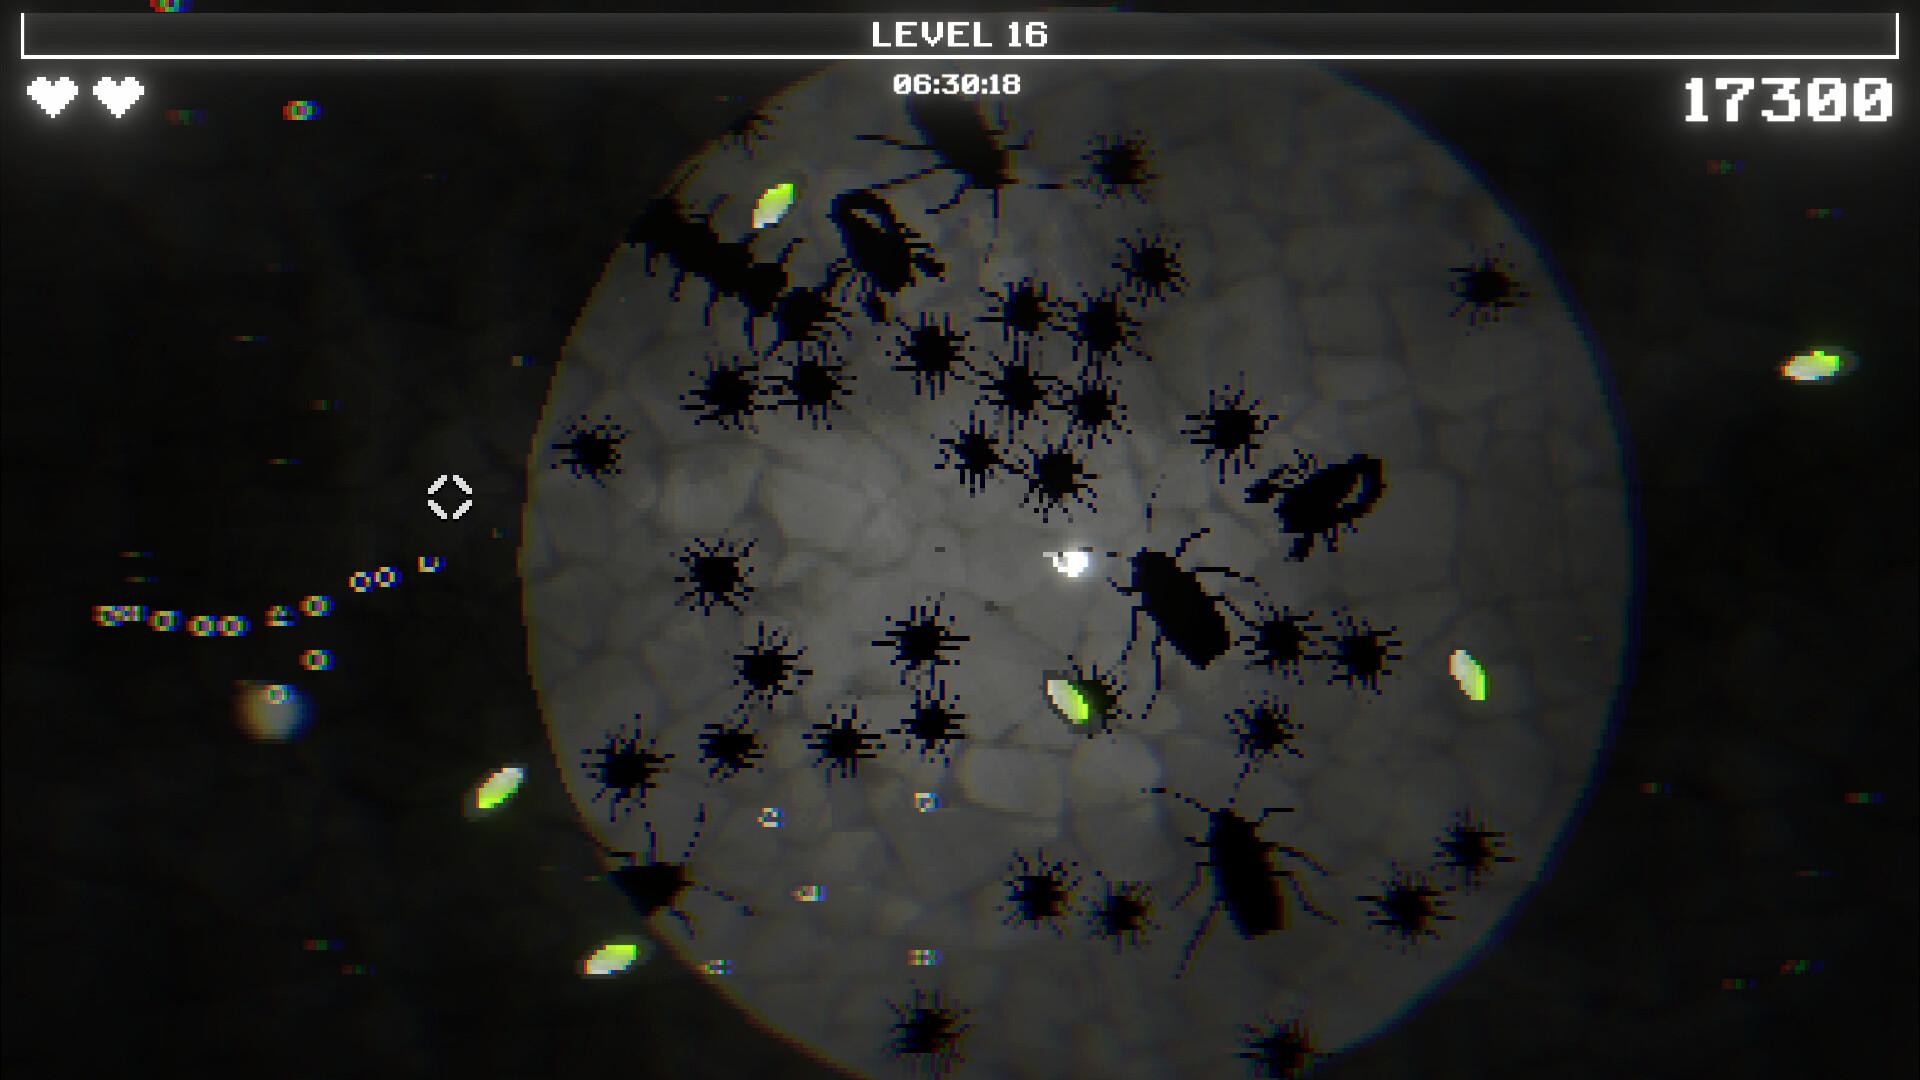 Screenshot №7 from game Disfigure